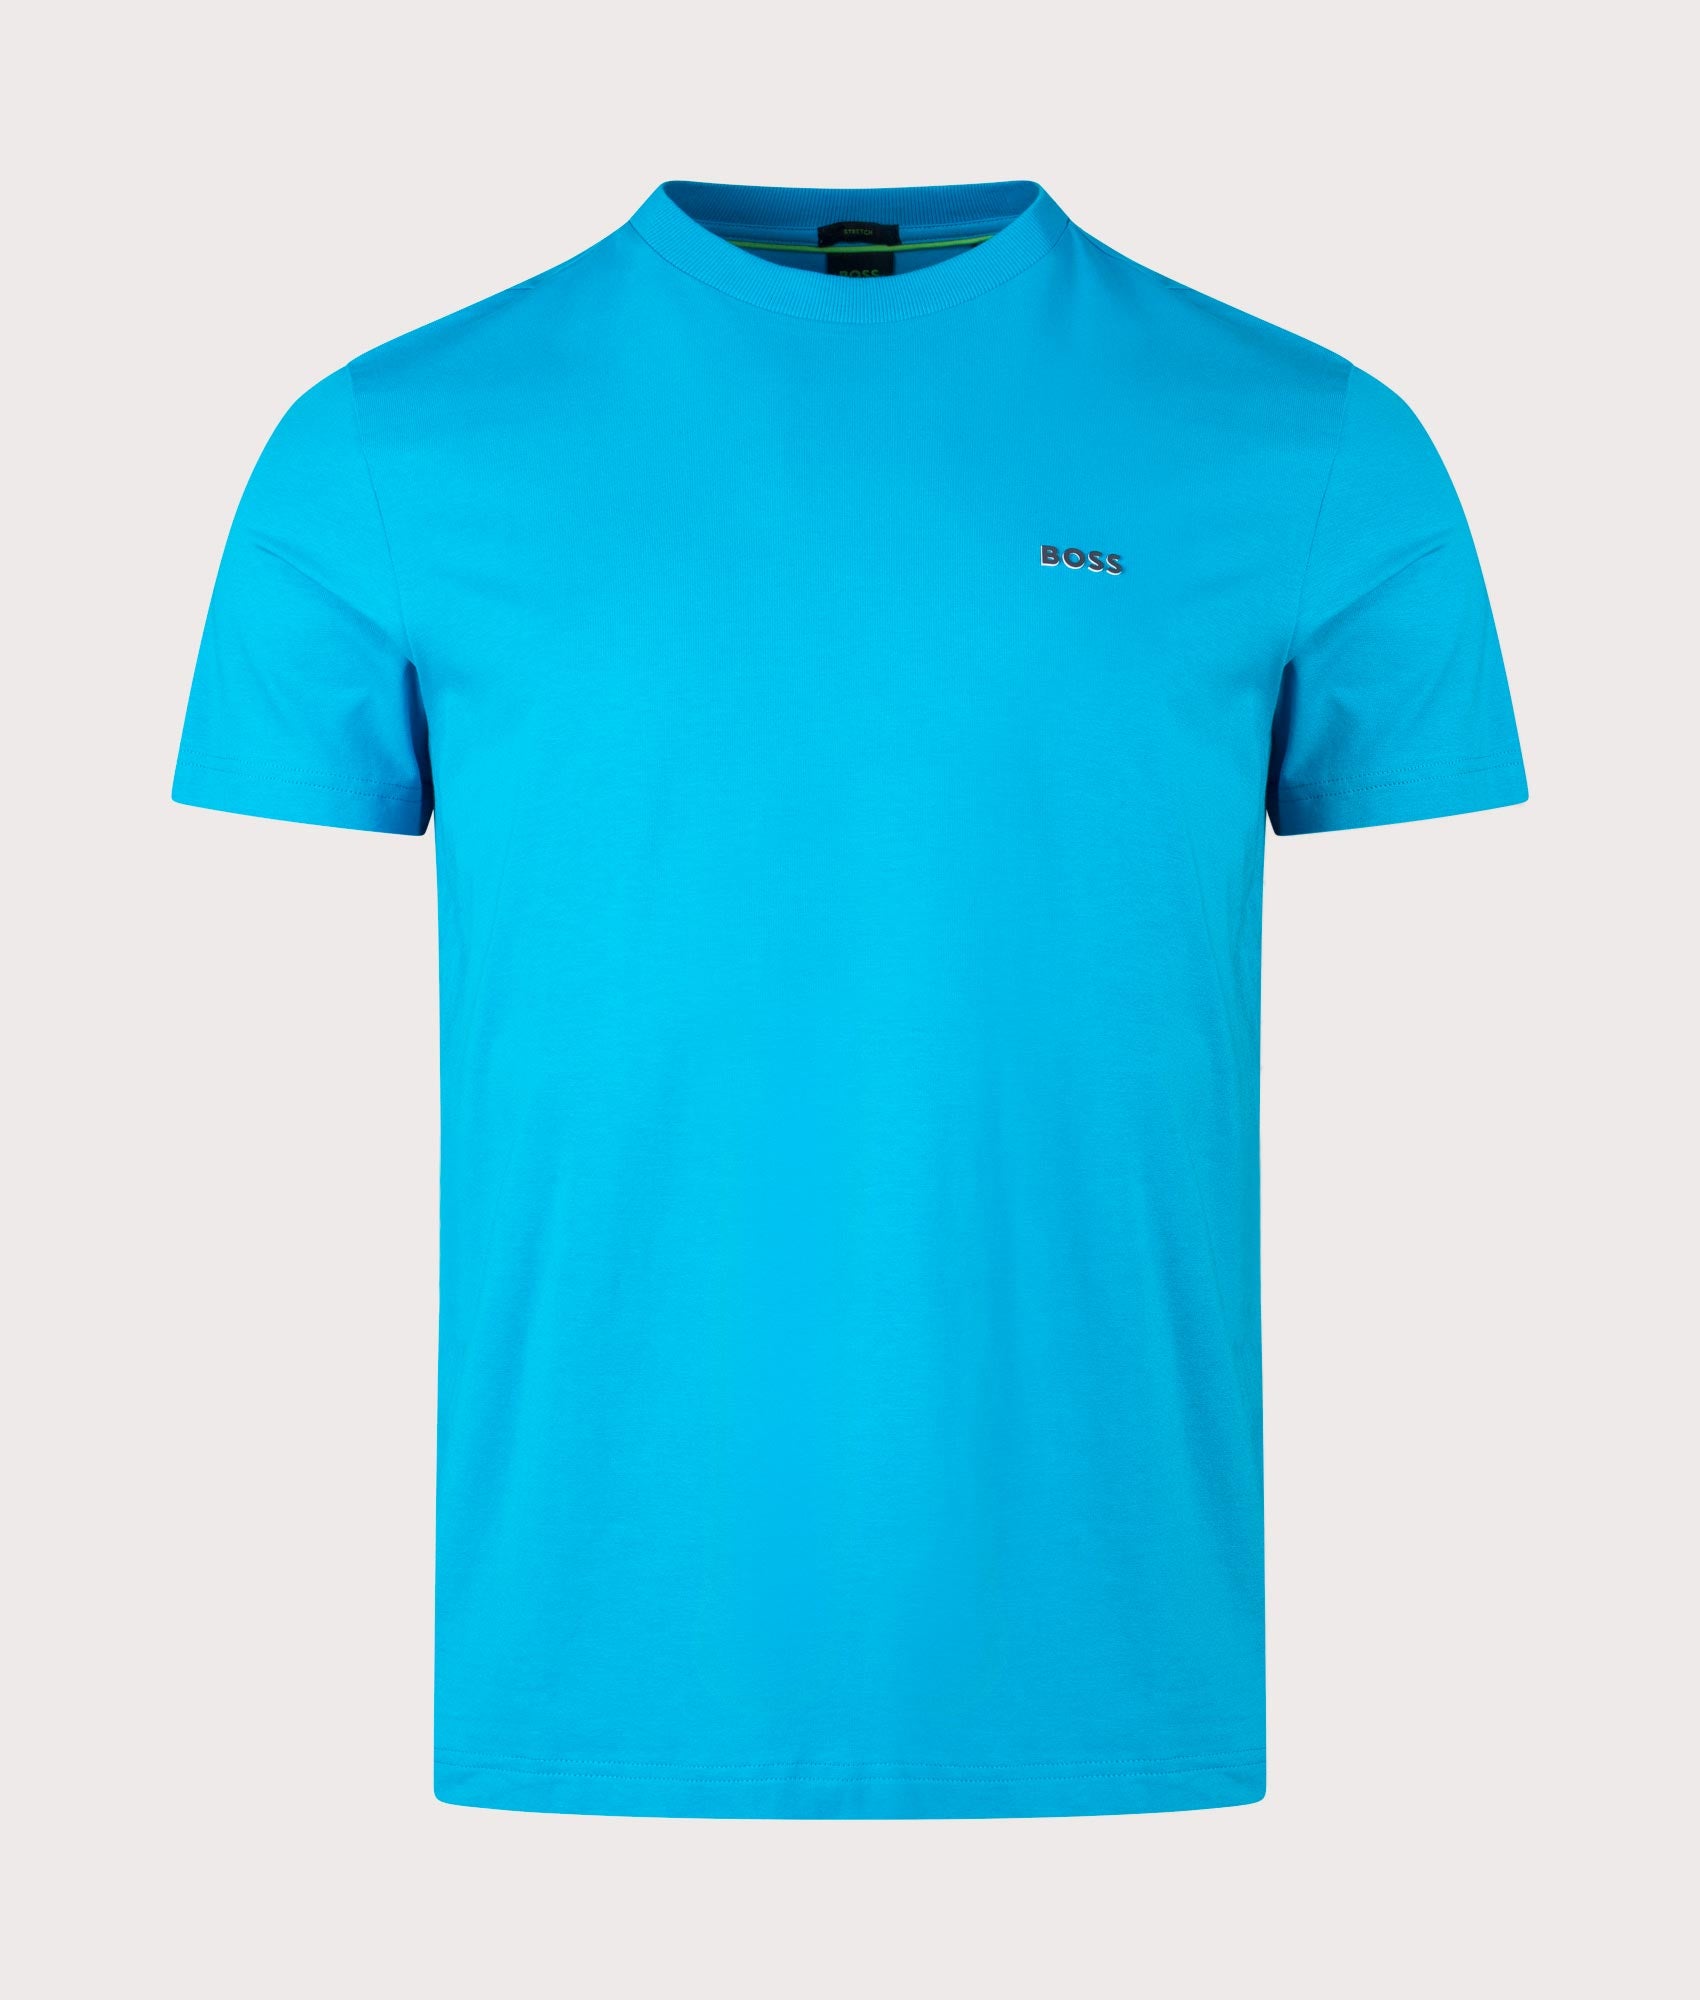 BOSS Mens Crew Neck Tee T-Shirt - Colour: 442 Turquoise/Aqua - Size: Large